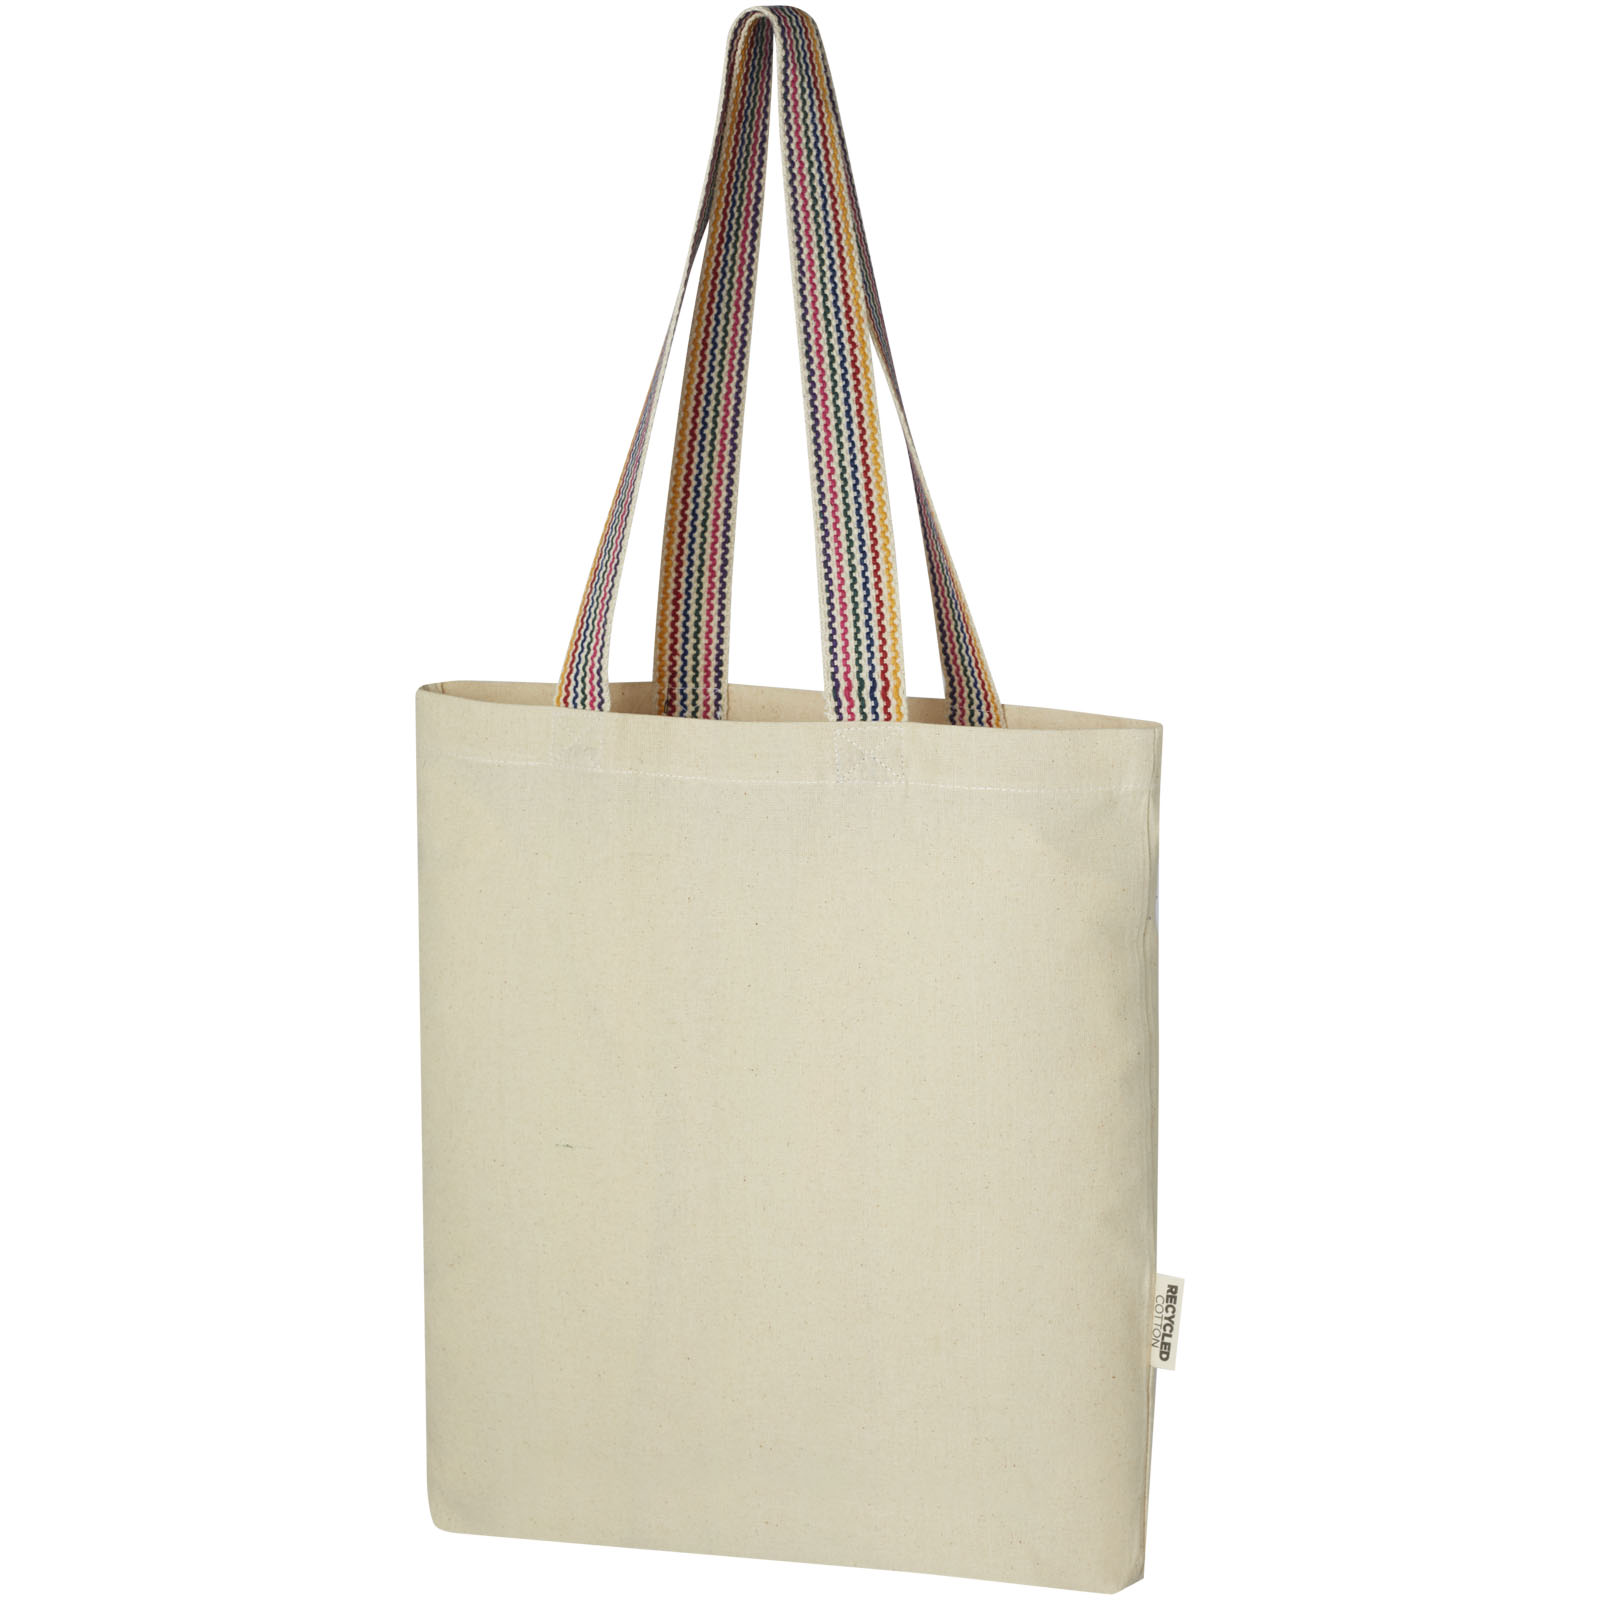 Shopping bag PAMBA made of recycled cotton - natural